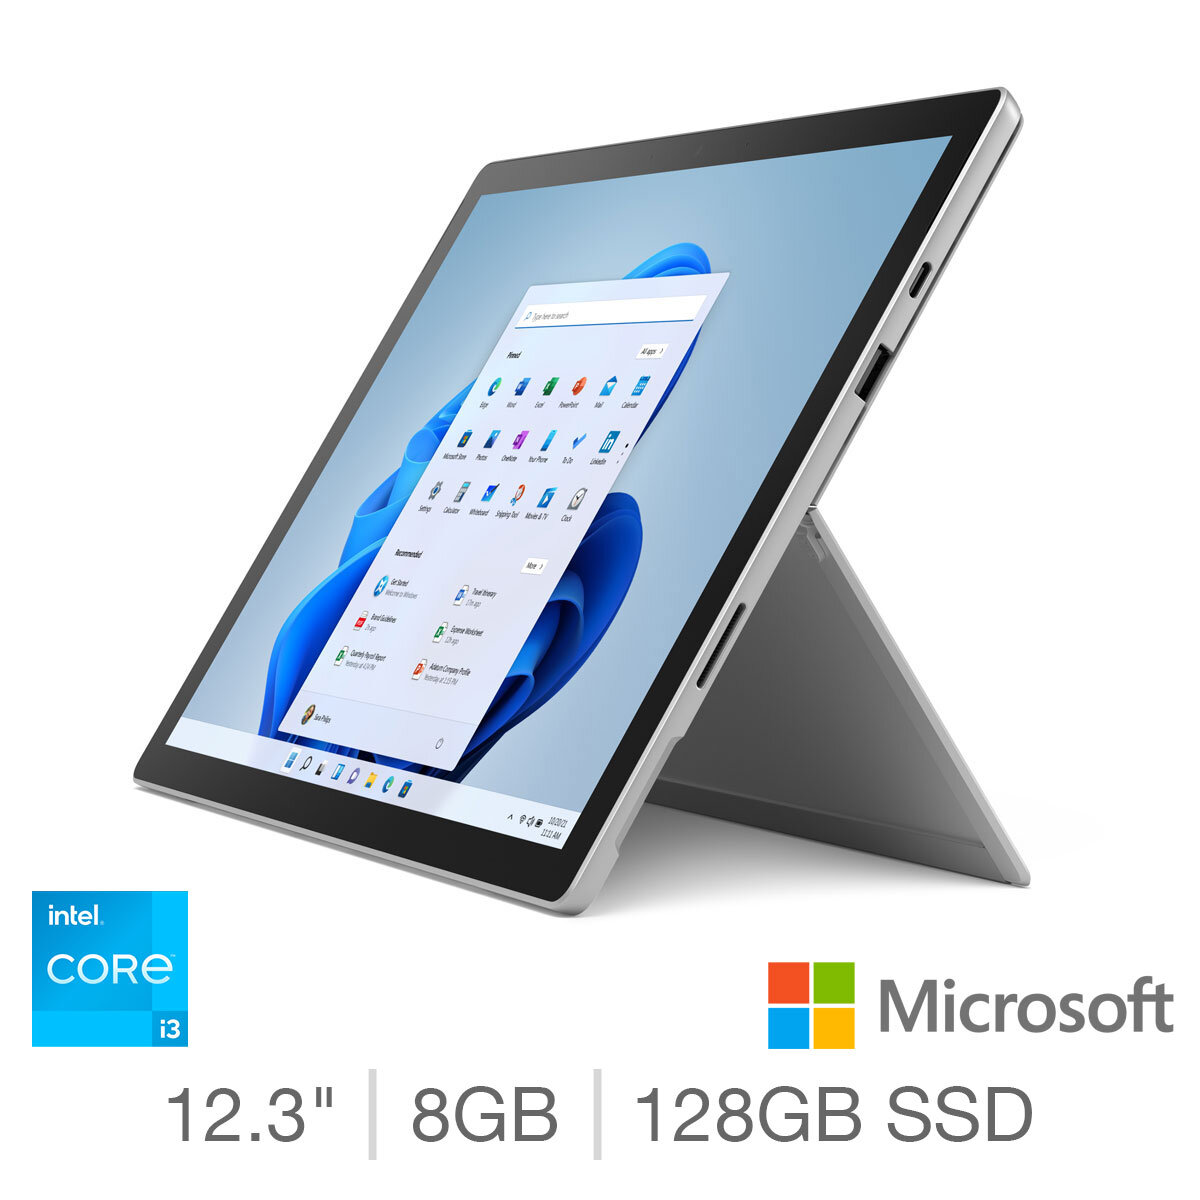 Buy Microsoft Laptop Pro 7+, Intel Core i3, 8GB RAM, 128GB SSD, 12.3 Inch  2 in 1 Laptop at costco.co.uk